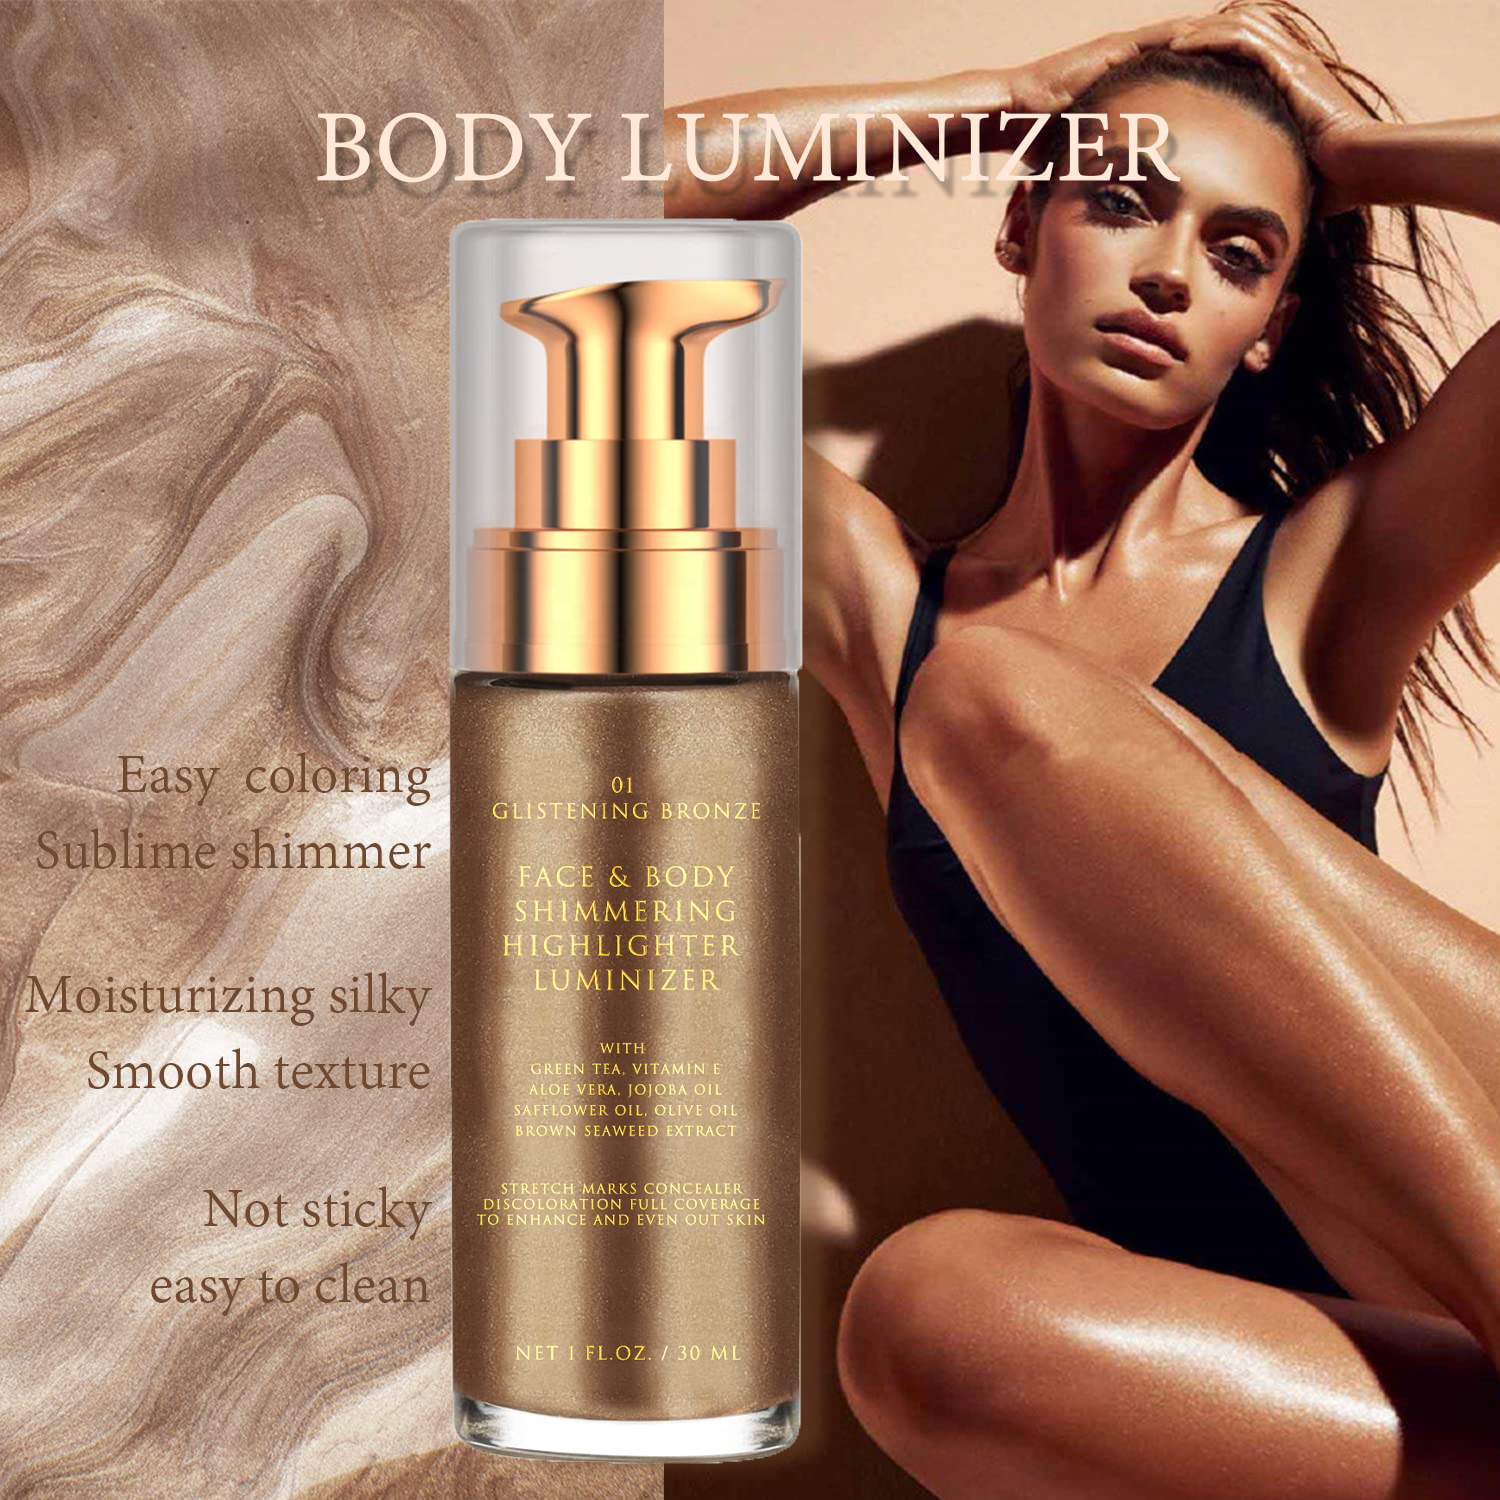 Highlighter Makeup Glitter Body Highlights Glow Liquid Illuminator Bronzer Cream Body Shimmer Glitter Dry Oil